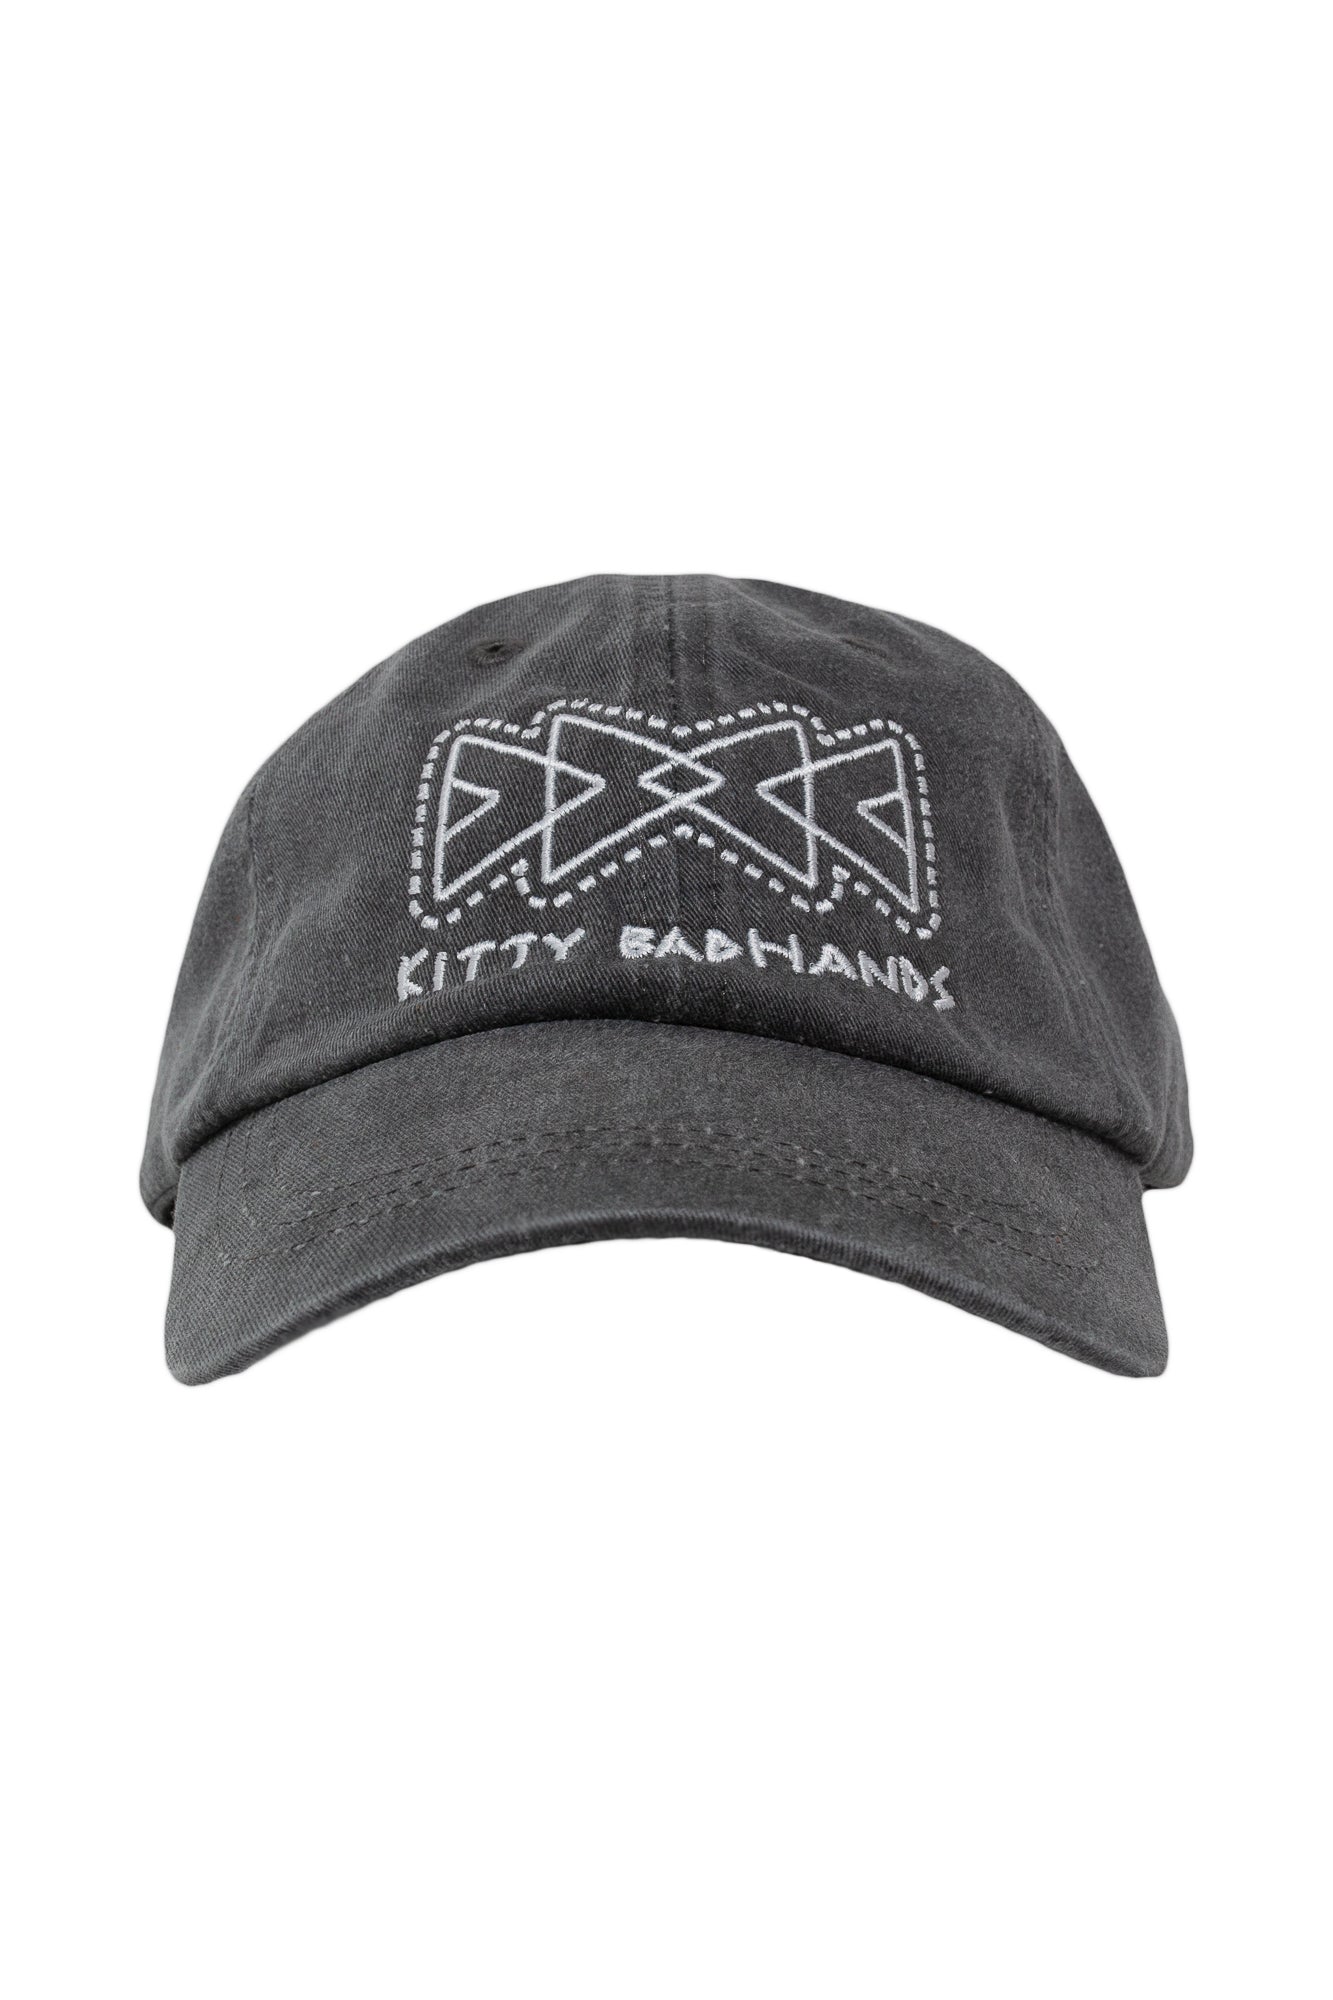 Classic KBH Logo Cap - Kitty Badhands - Hats - Accessories - baseball hat - hat